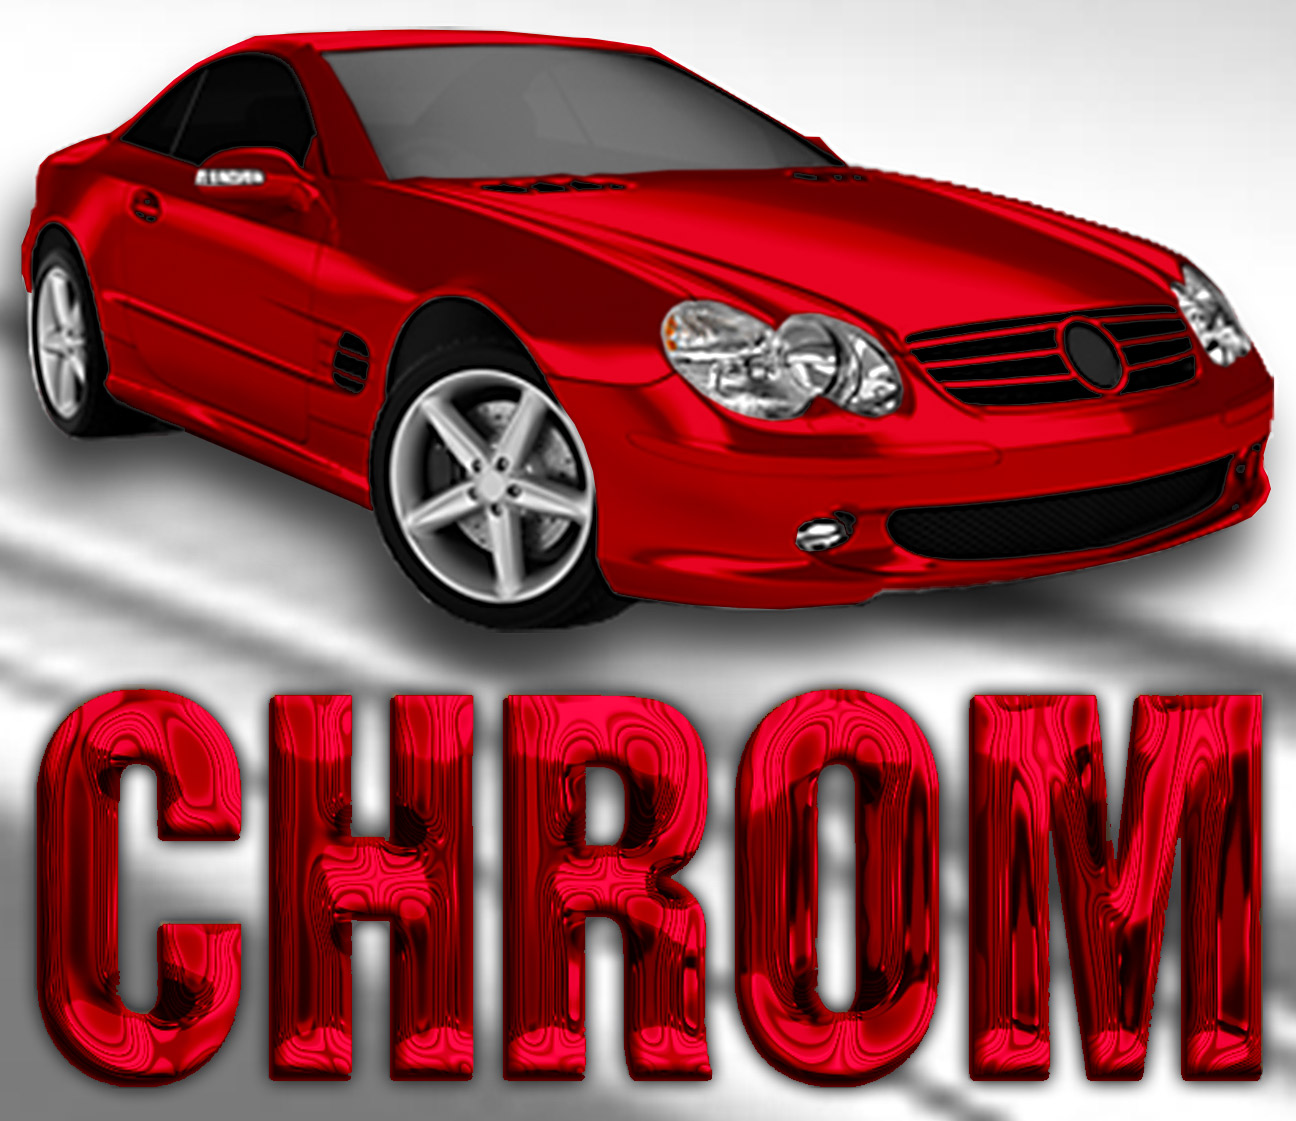 ETCHABLE Chrom Rot für 3D Verklebung Car Wrapping, Spiegelfolie, Chromfolie